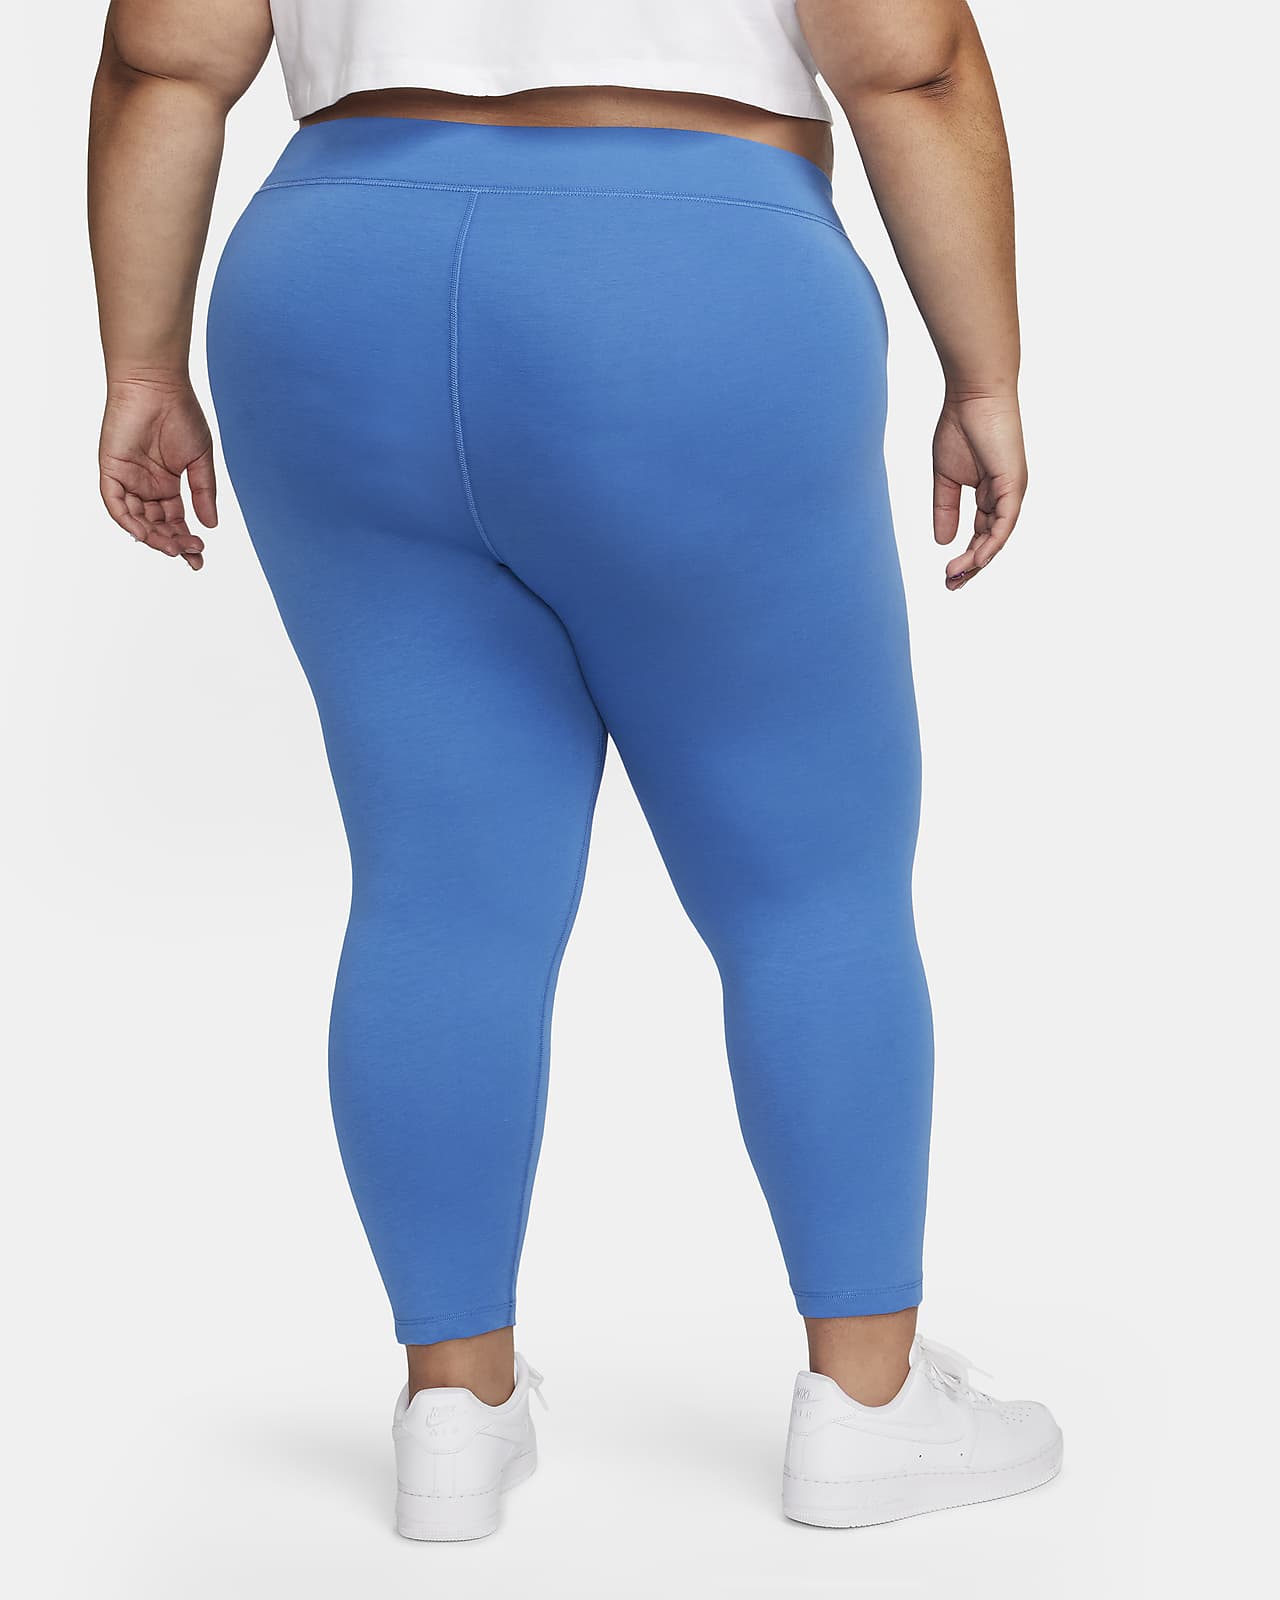 Nike Sportswear Swoosh Tights Leggings Women by Nike of (Blue color) for  only $50.00 - DD5588-430